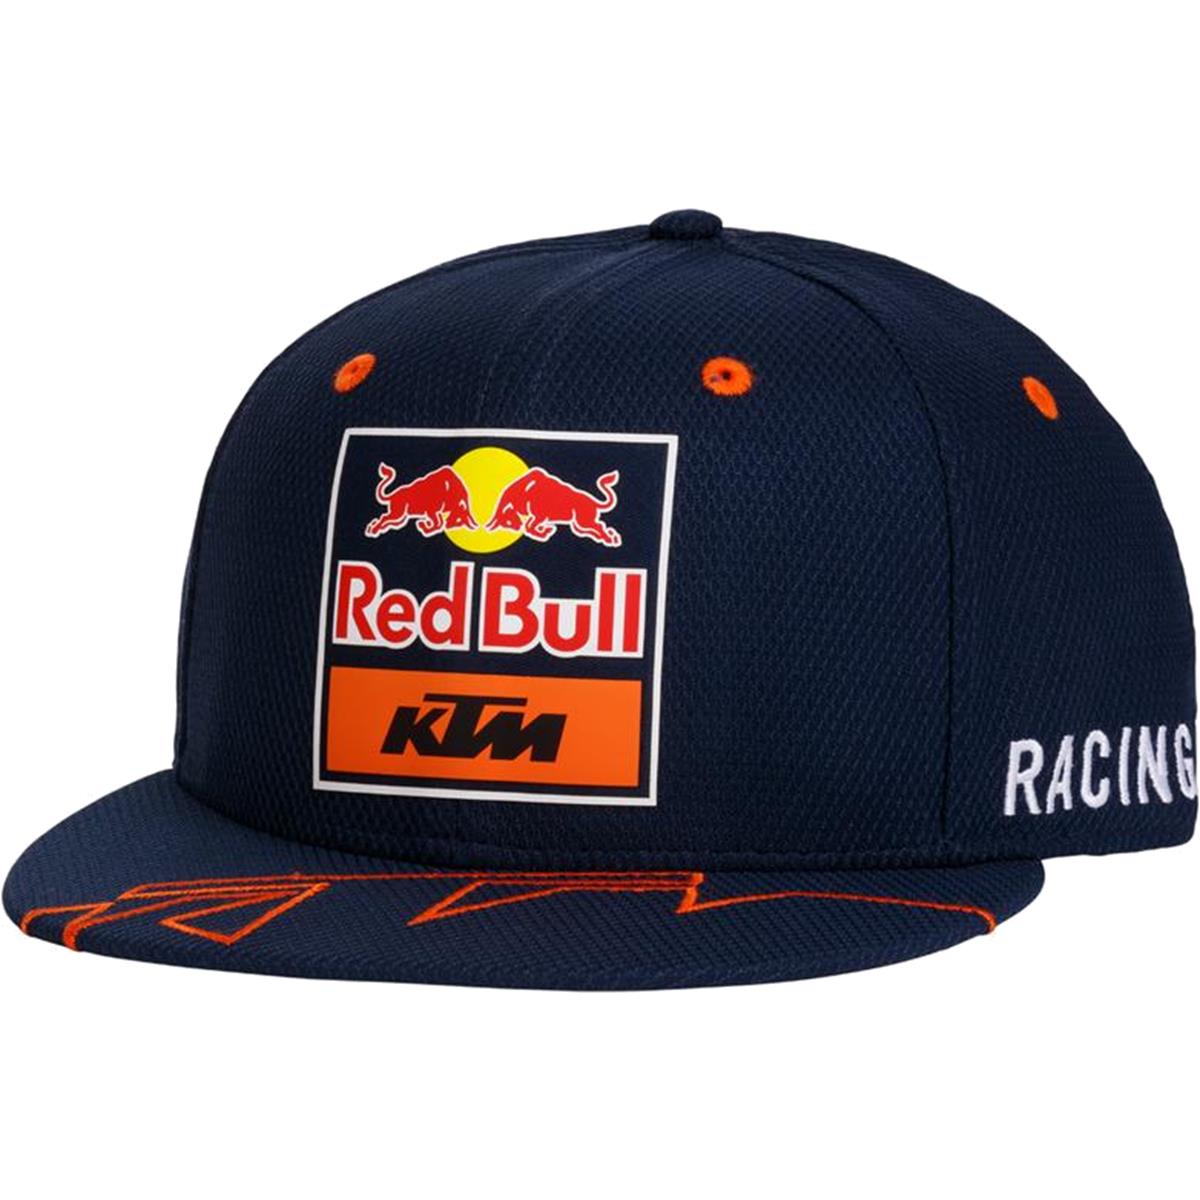 Red Bull Kids Snapback Cap KTM New Era OTL Navy/Orange